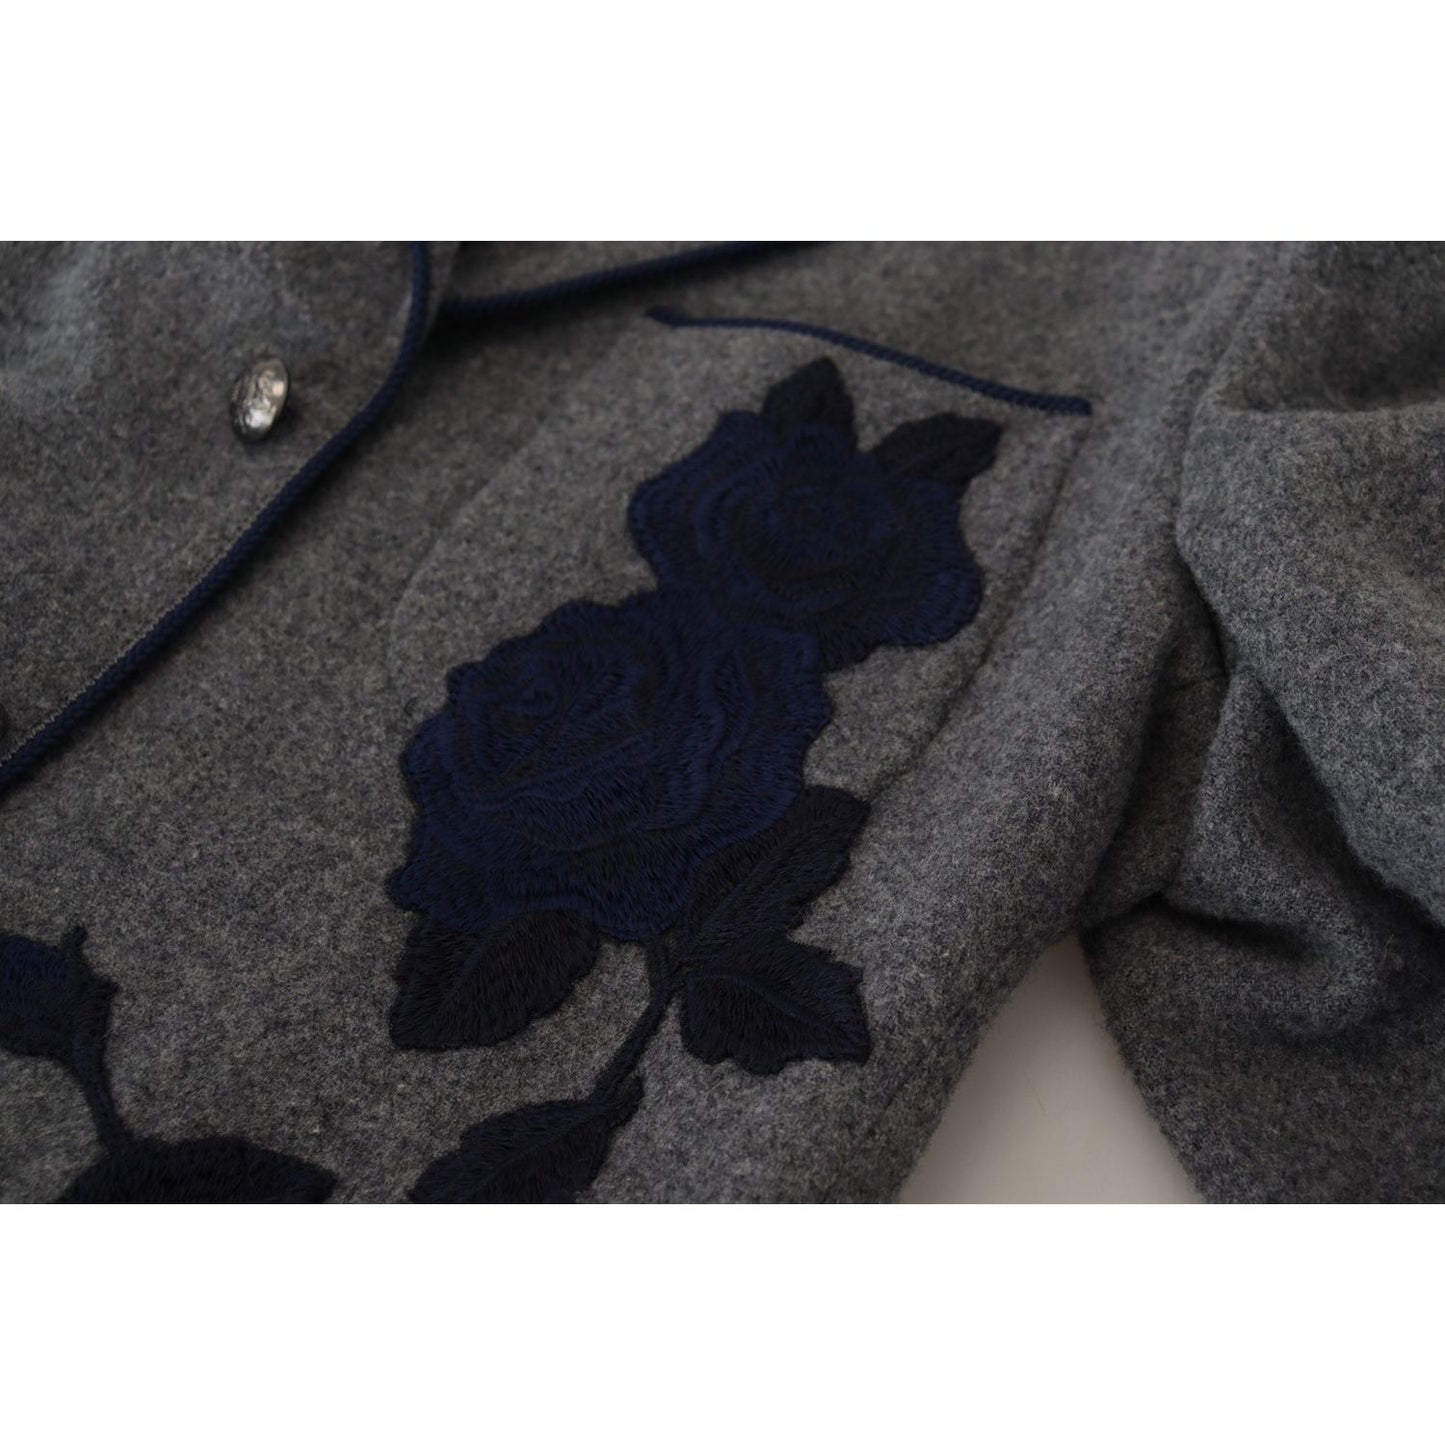 Dolce & Gabbana Elegant Gray Wool Blazer with Blue Rose Embroidery gray-wool-roses-slim-fit-jacket-blazer